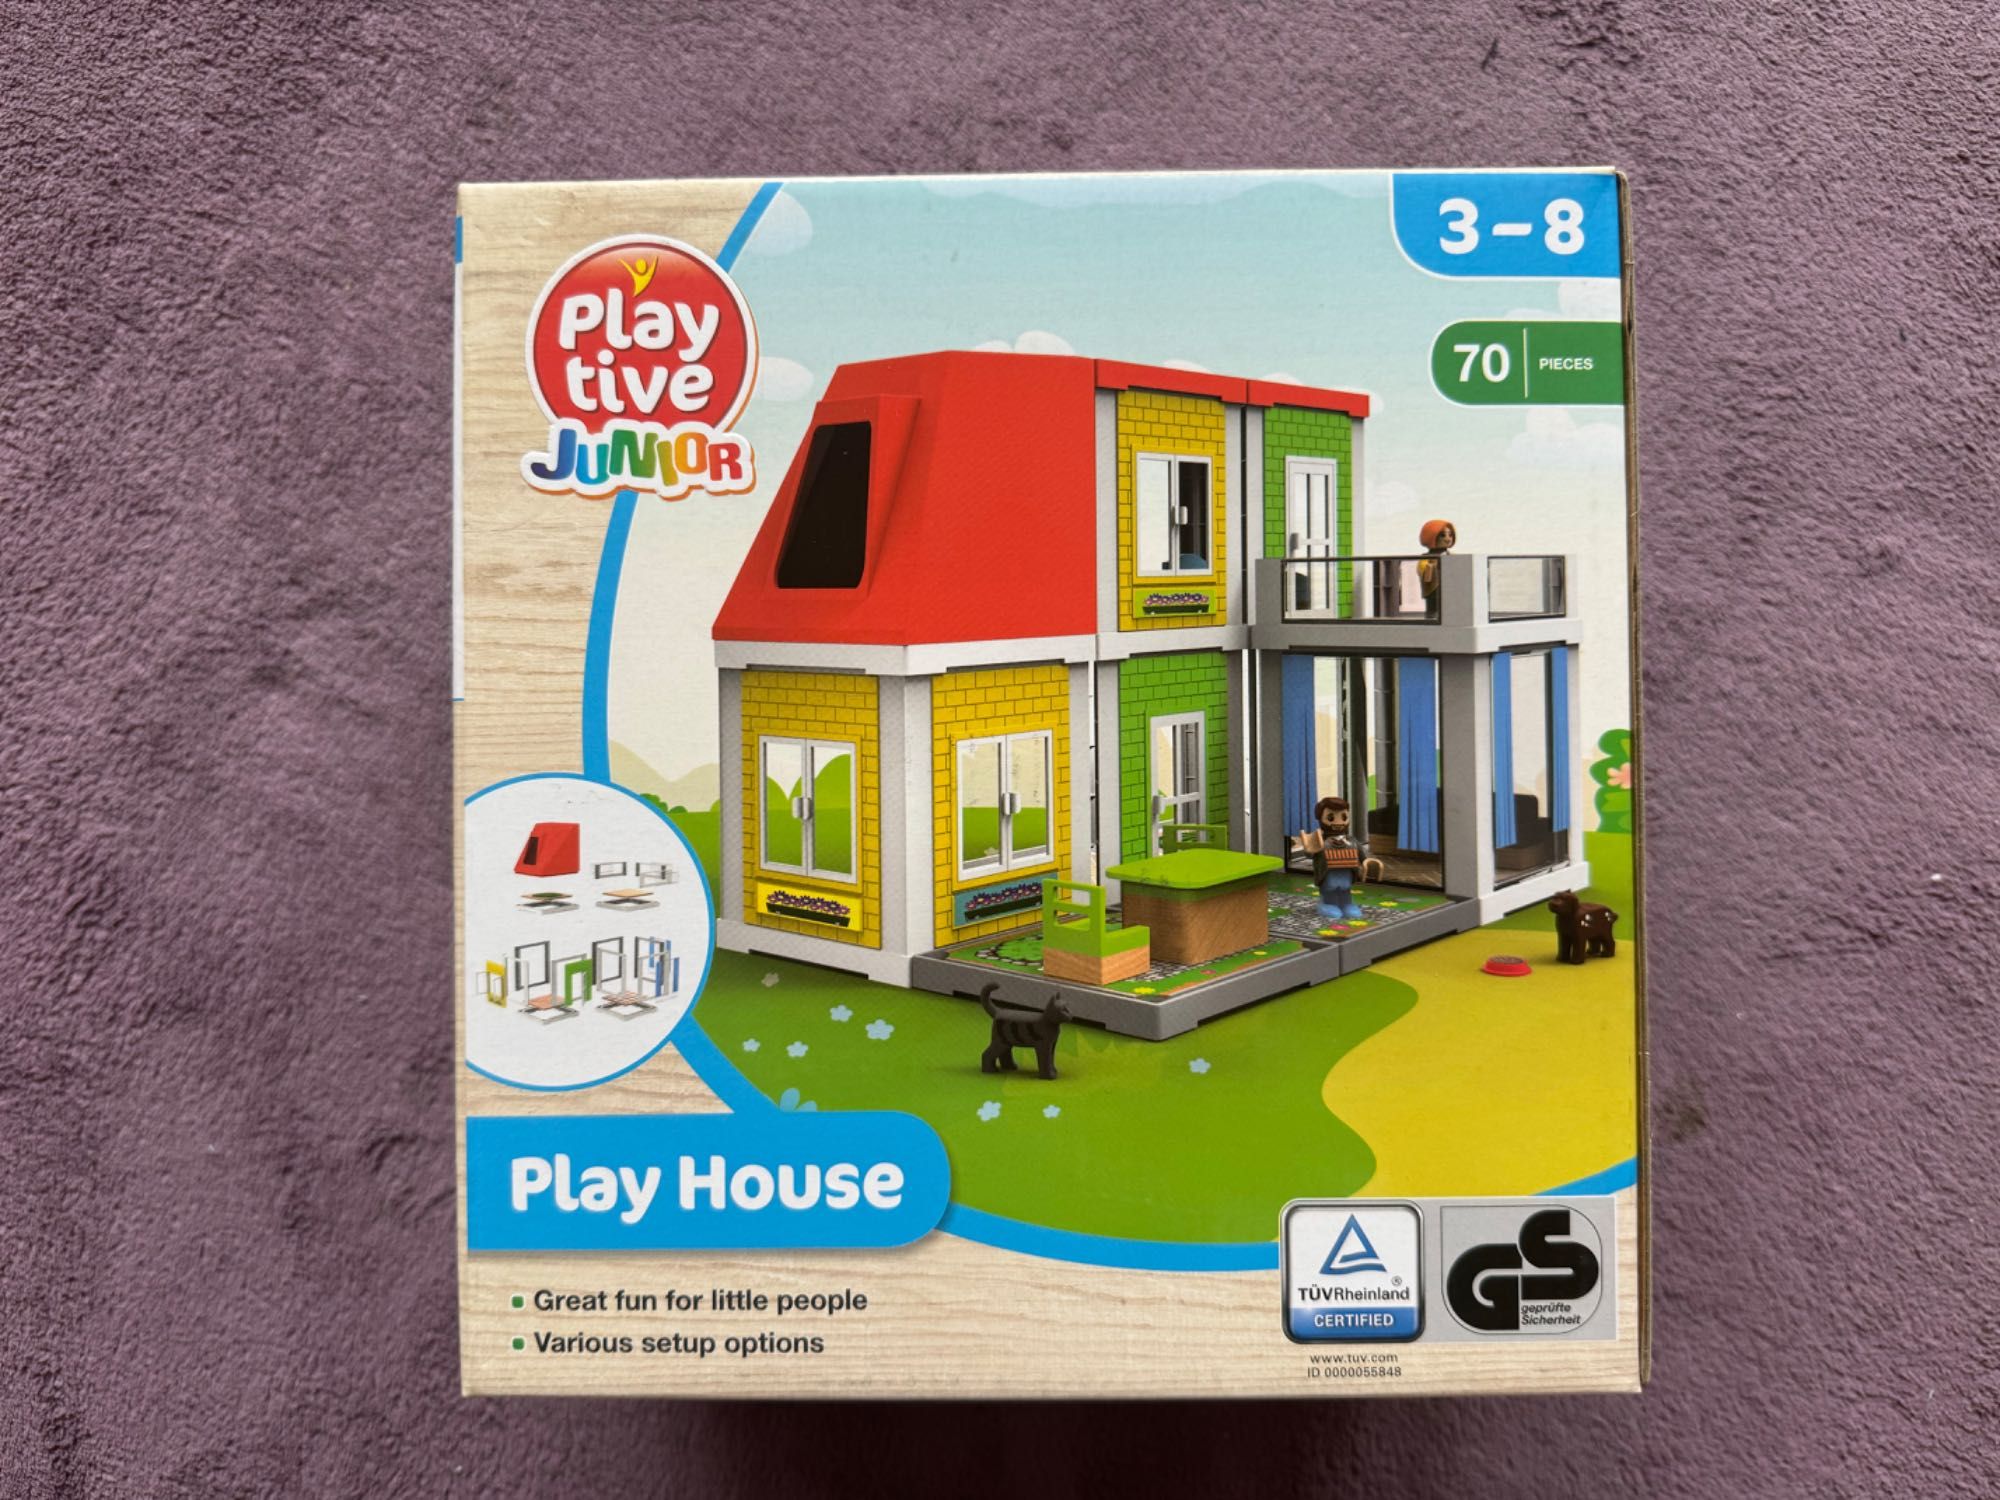 Детска къща за игра